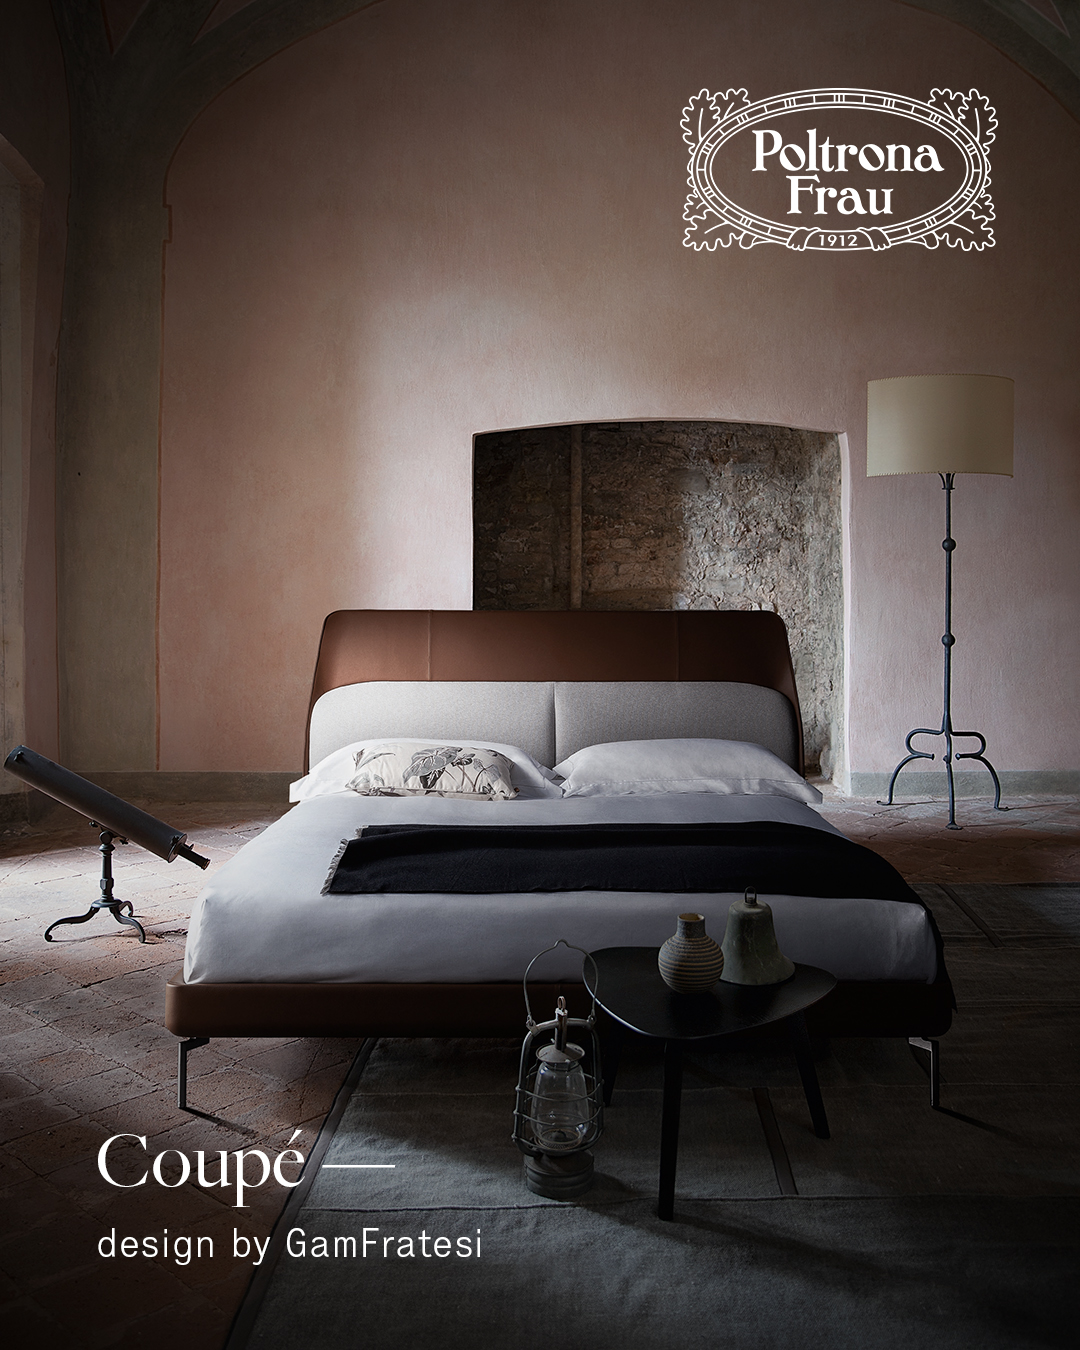 Bed promotion Poltrona Frau free mattress